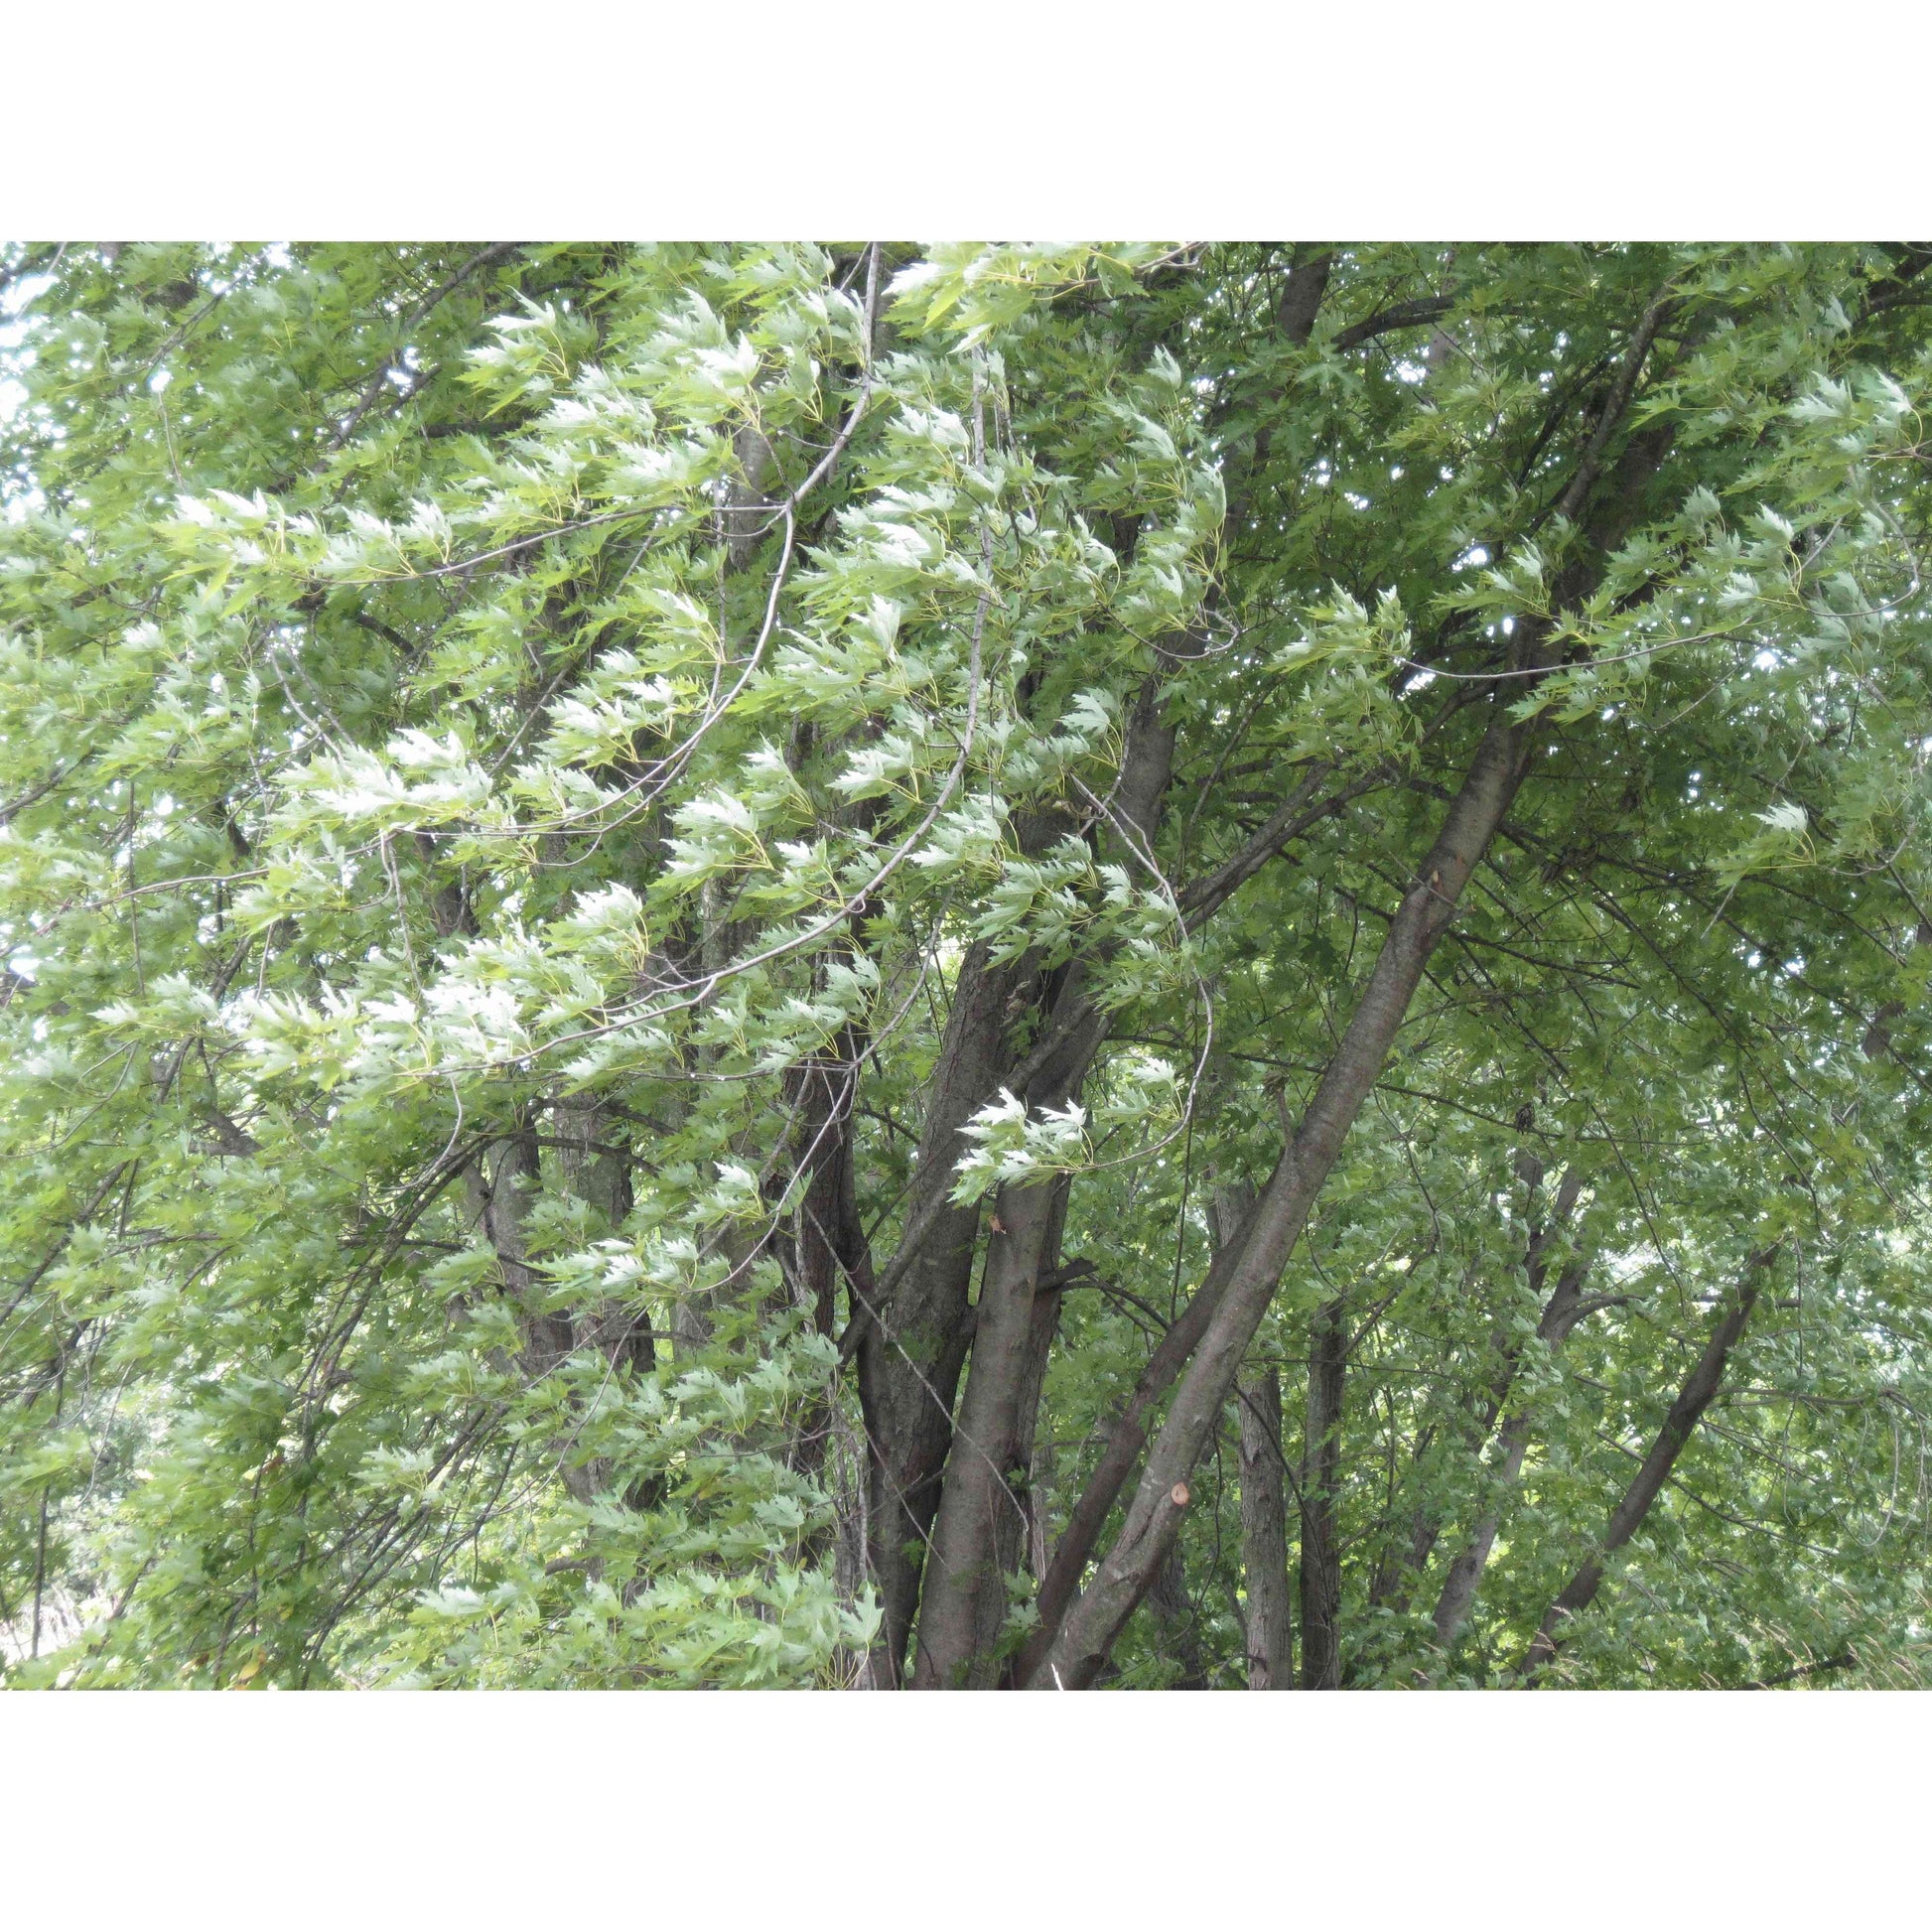 Acer saccharinum (Silver Maple)  Natural Communities LLC